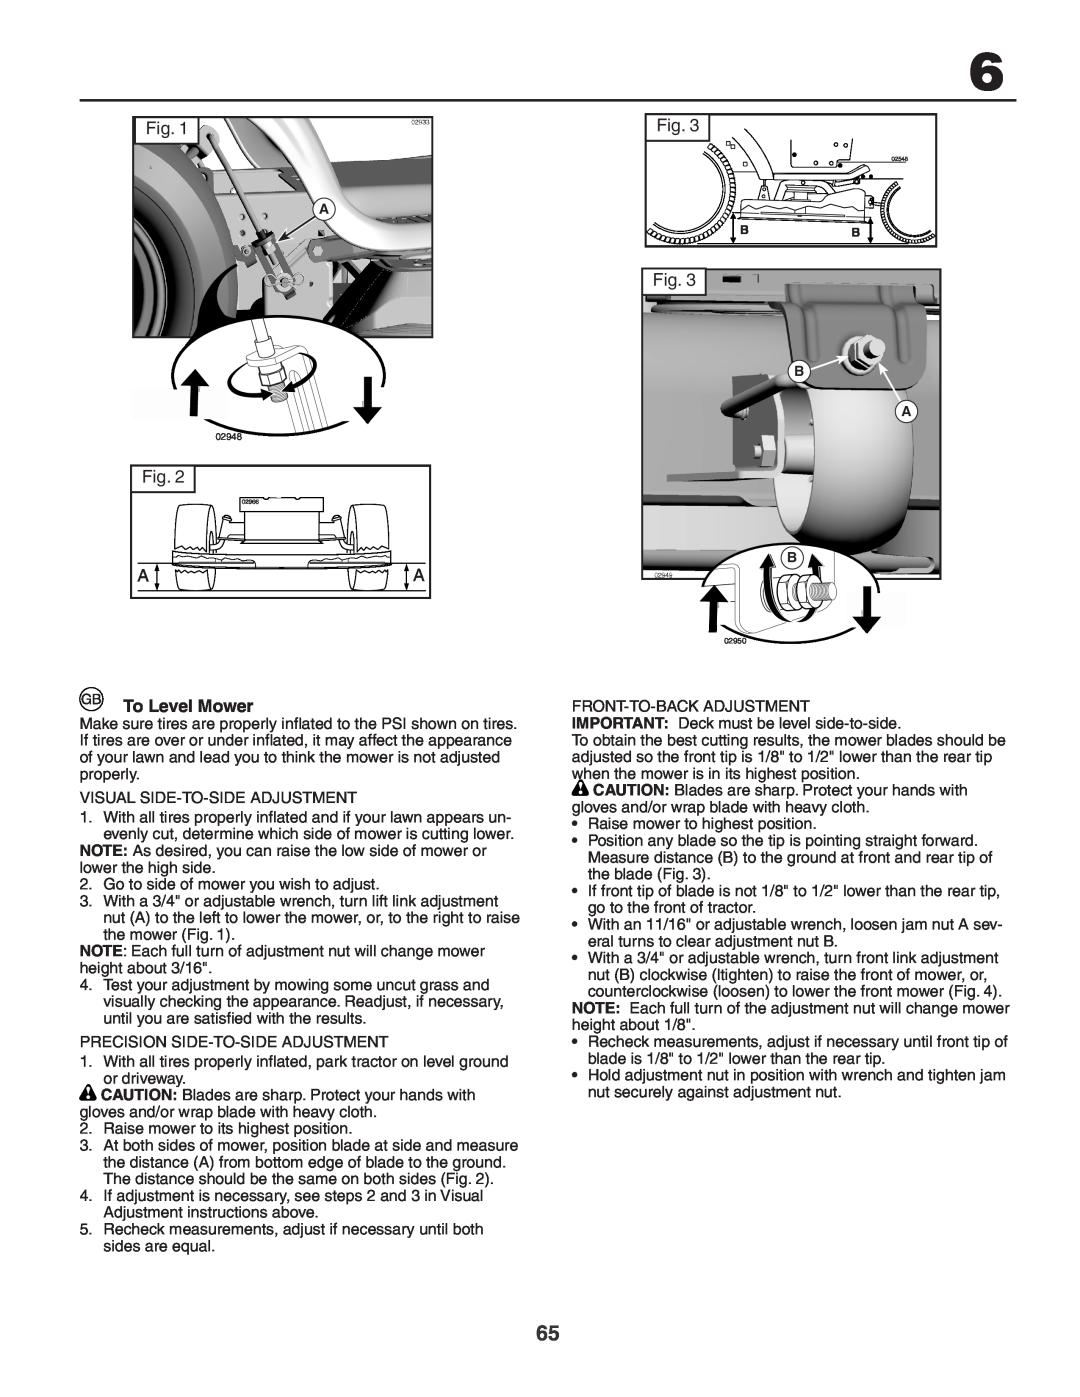 Husqvarna GTH260XP instruction manual To Level Mower 